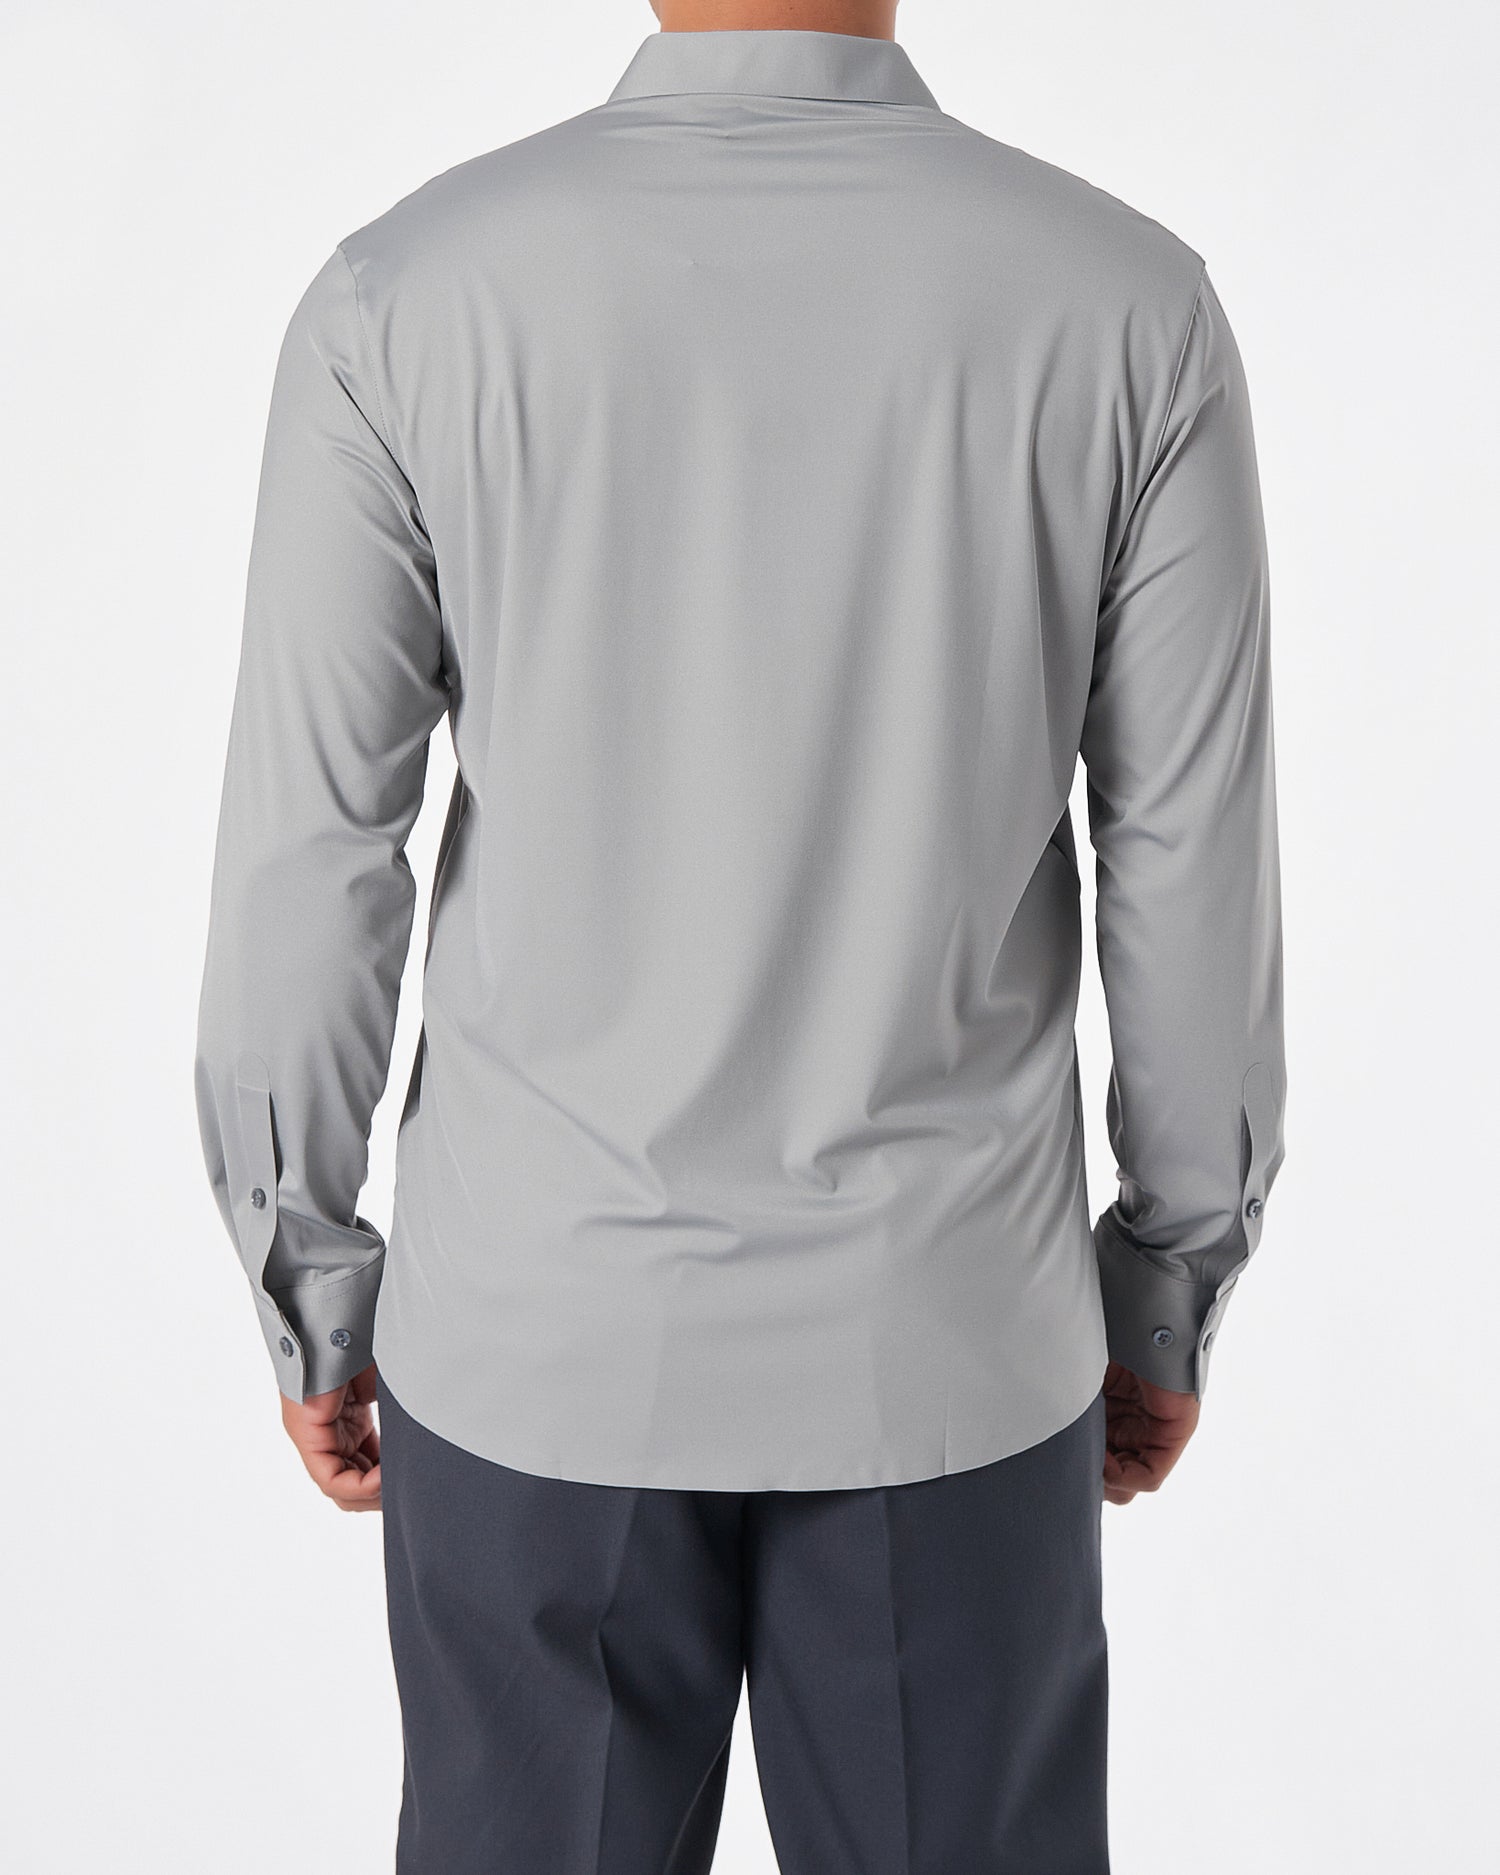 NK Stretchable Men Grey  Shirts Long Sleeve 24.90